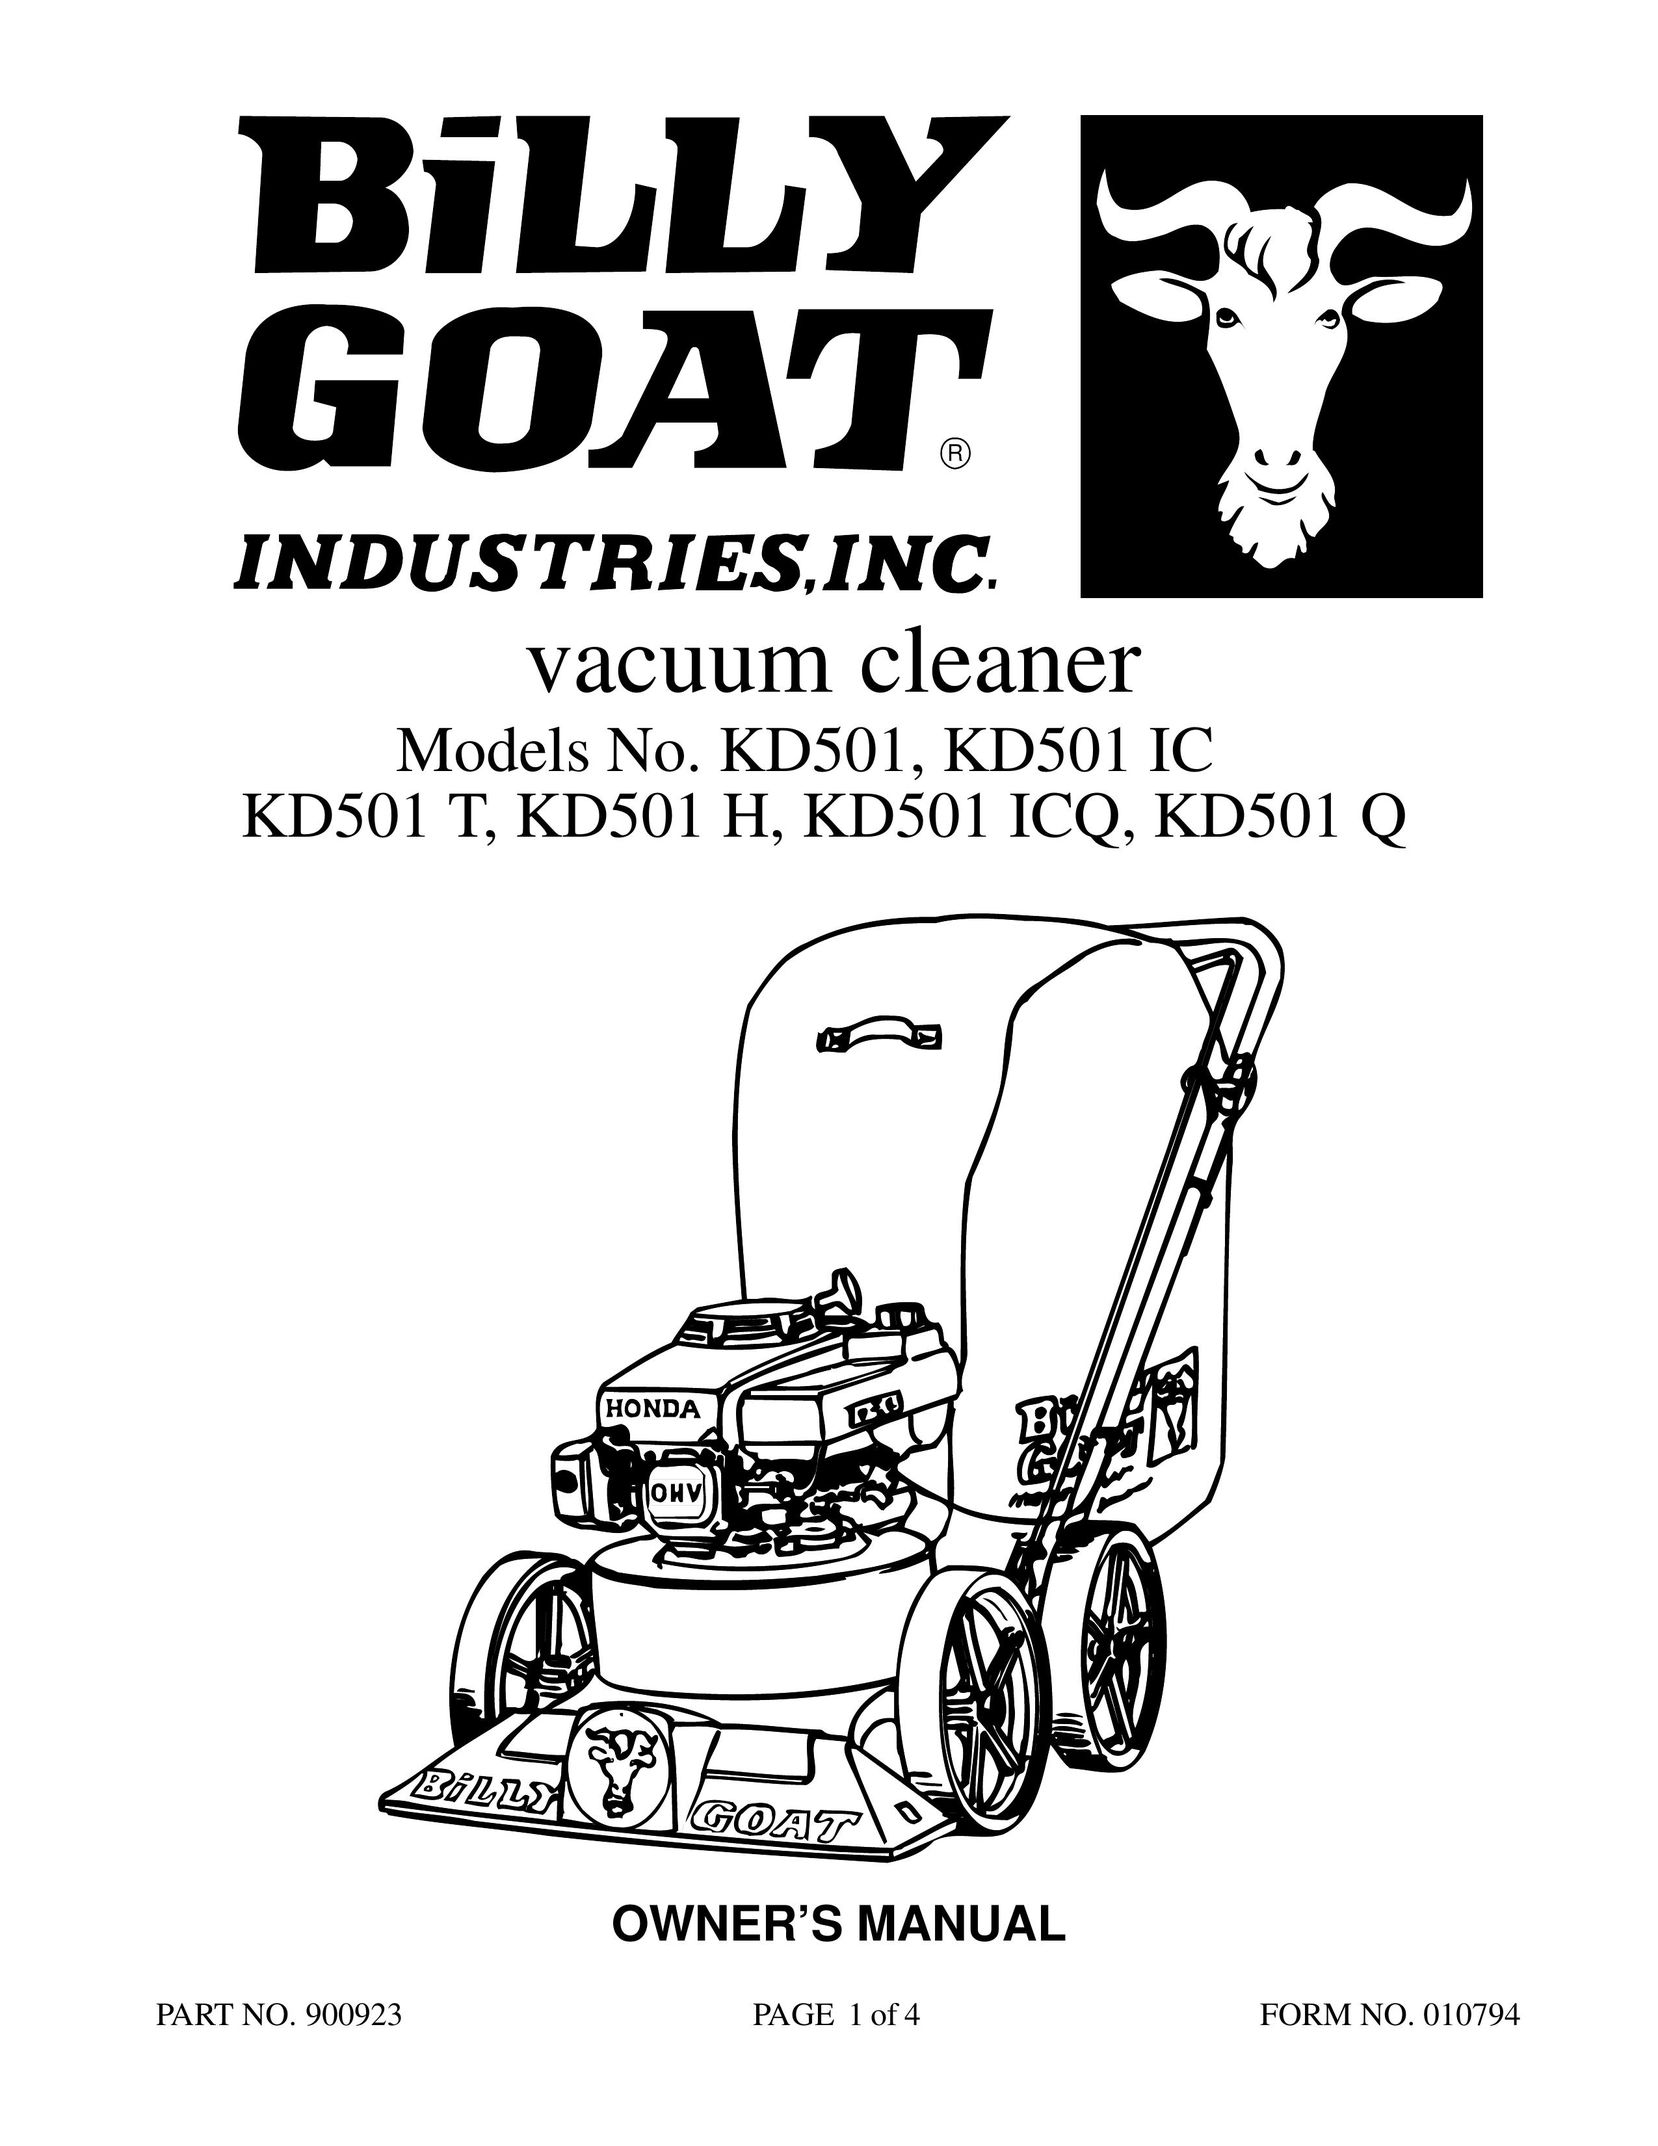 Billy Goat KD501 Q Vacuum Cleaner User Manual